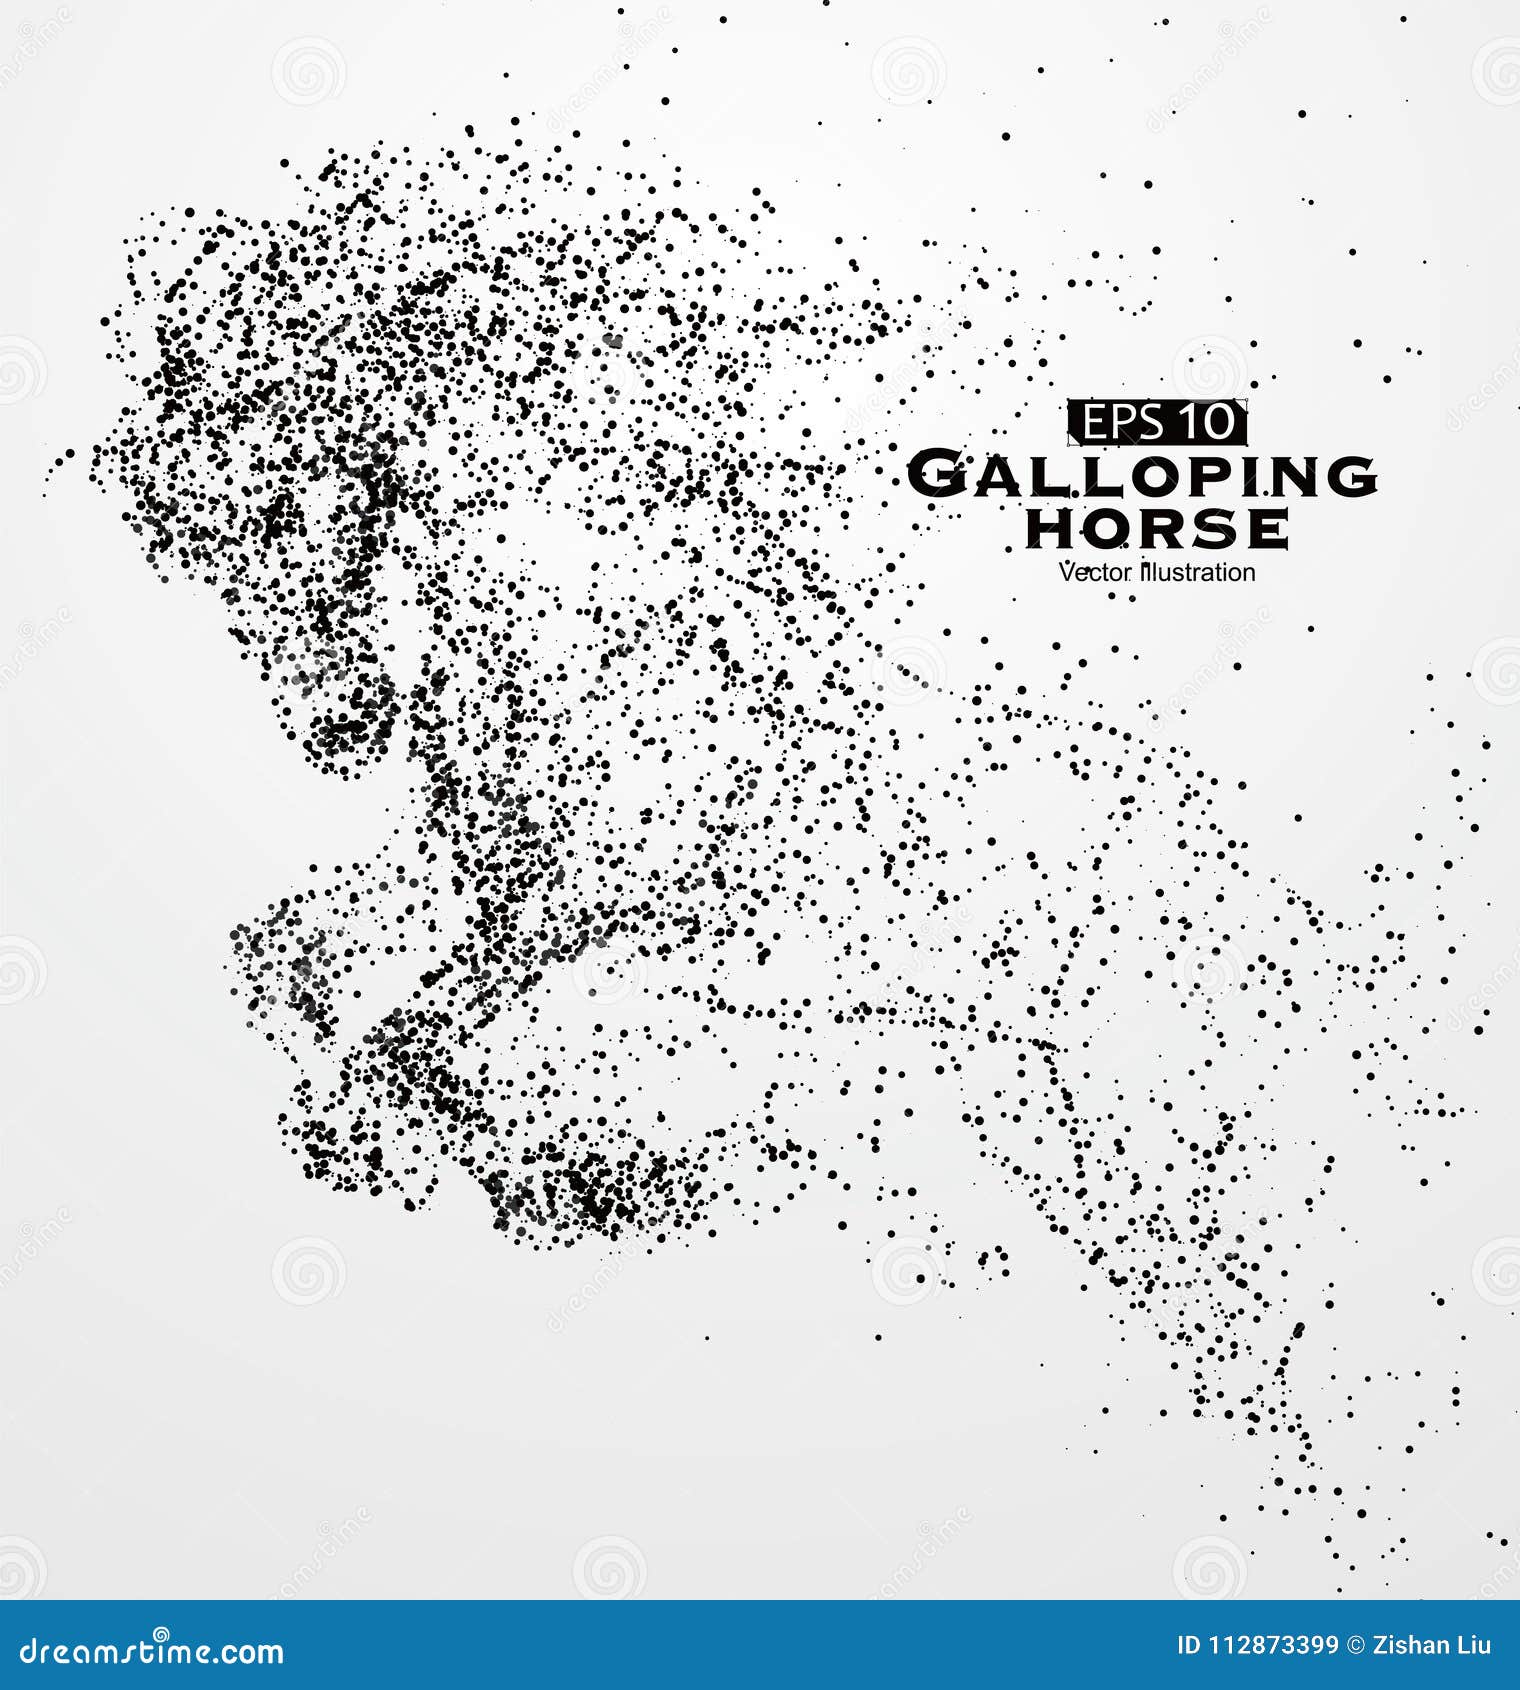 Galloping Horse Abstract Cartoon Vector | CartoonDealer.com #100849687